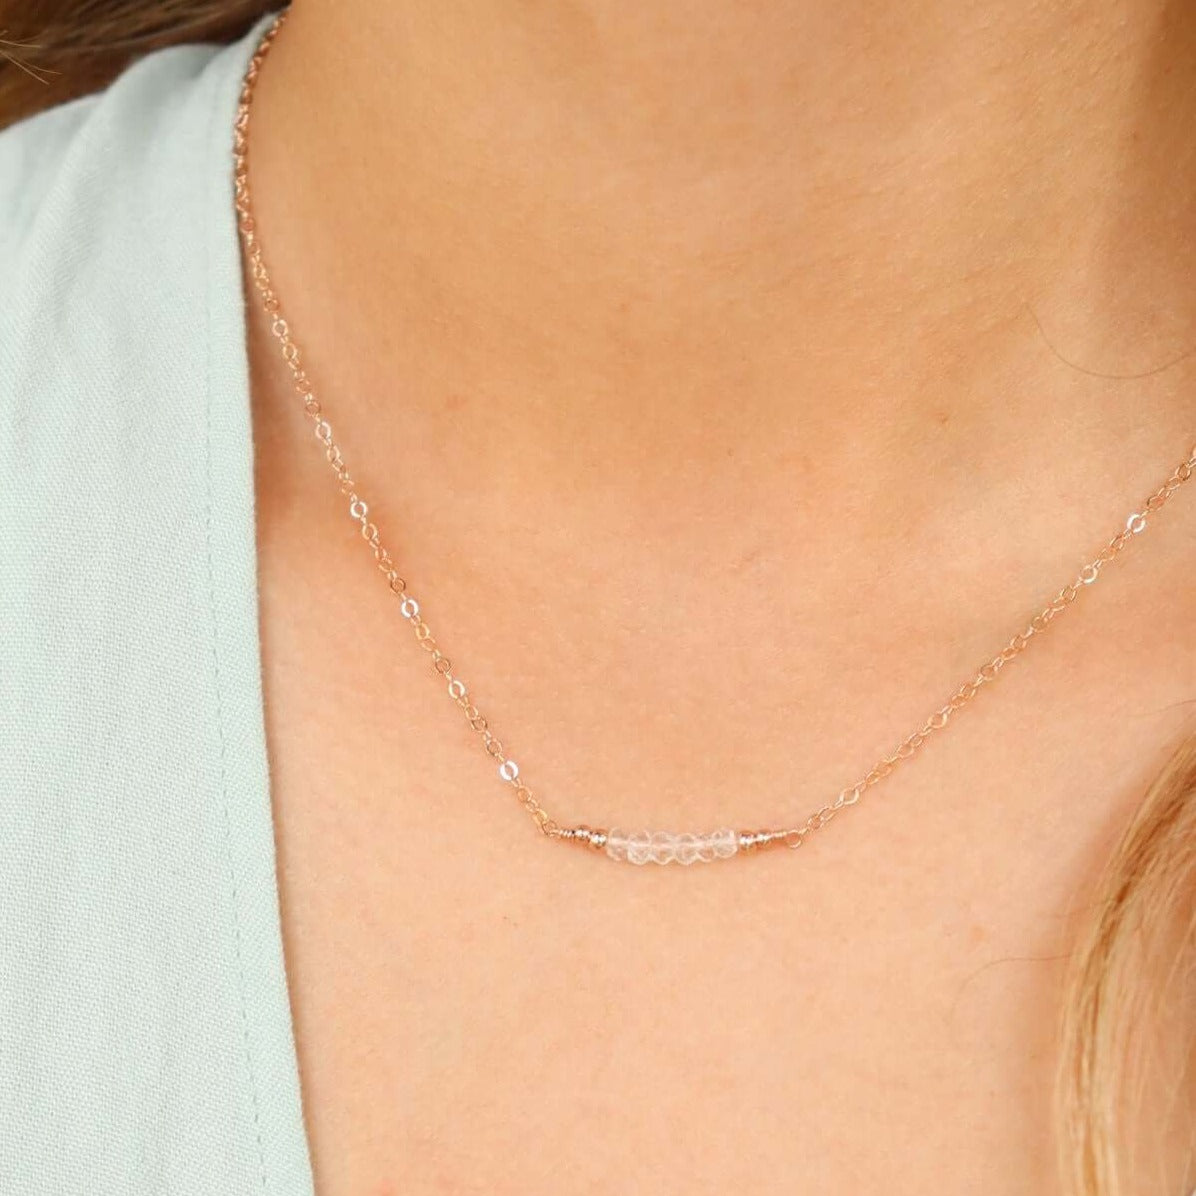 Faceted Bead Bar Necklace - Crystal Quartz - 14K Rose Gold Fill - Luna Tide Handmade Jewellery